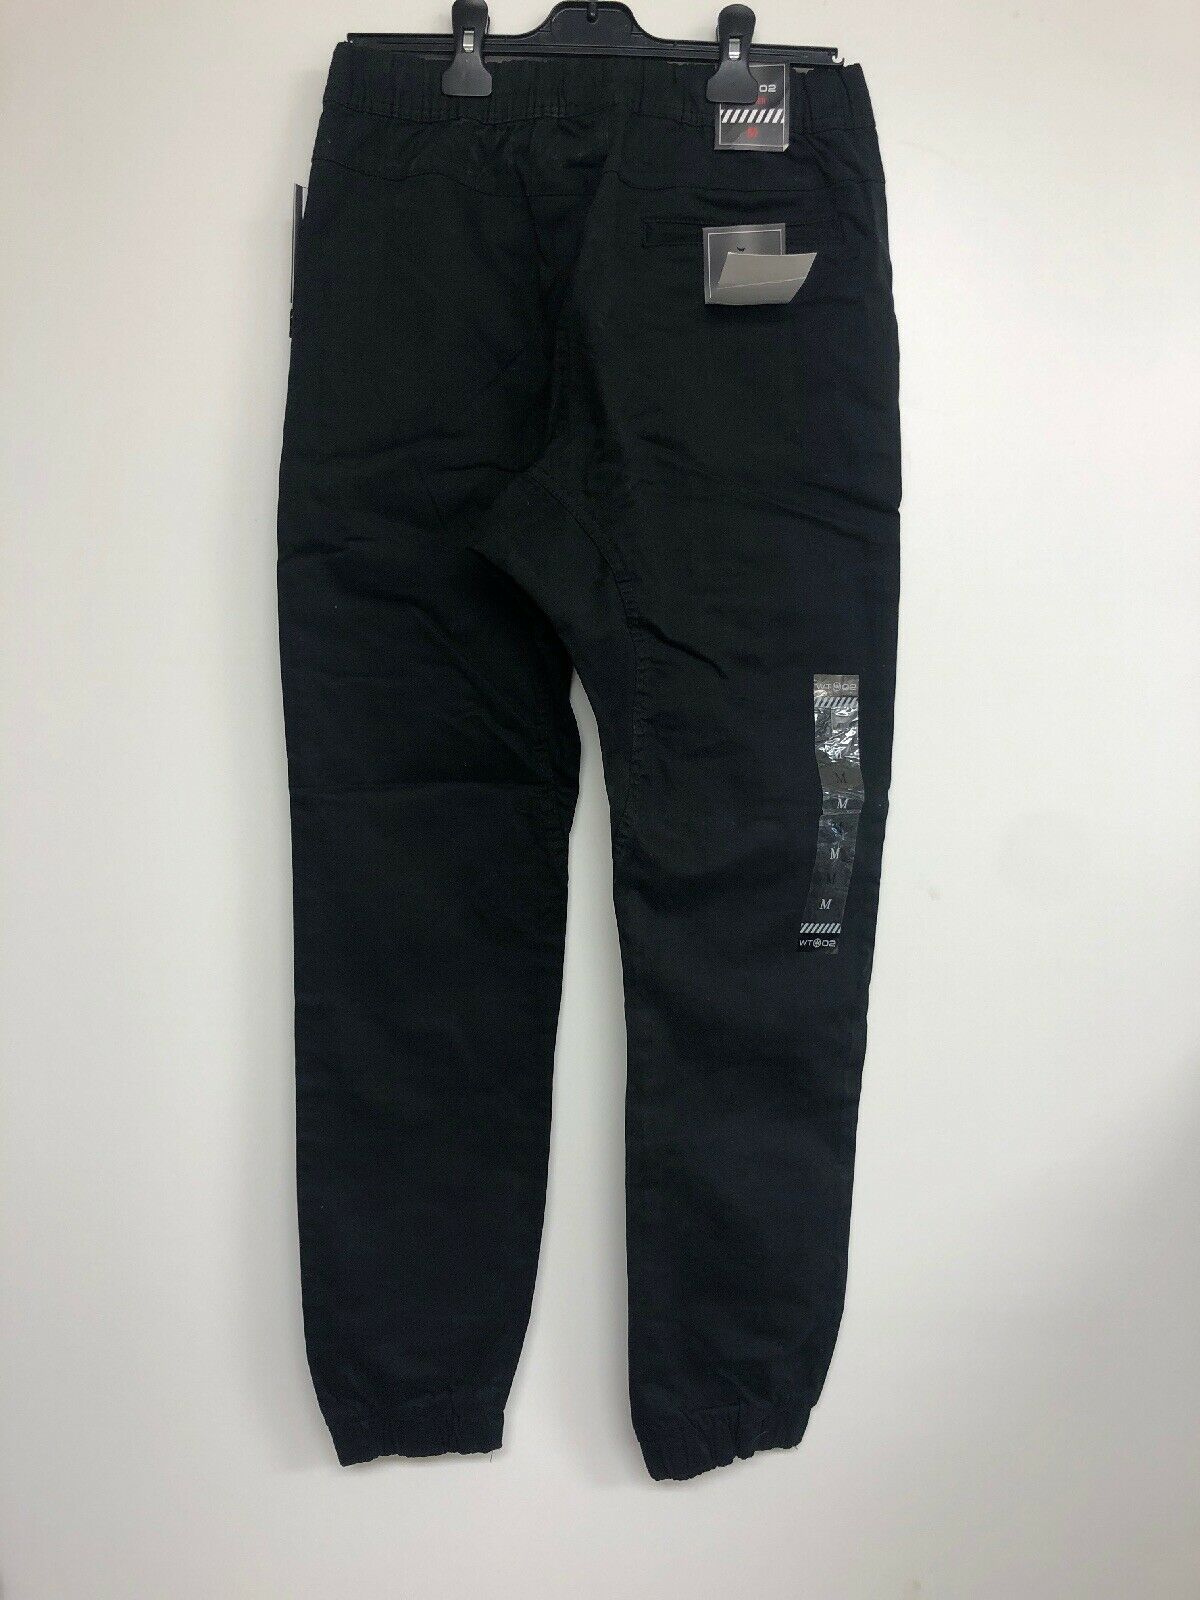 WT02 Mens Jogger Pants Stretch Twill Fabric, Black , Medium - Pants